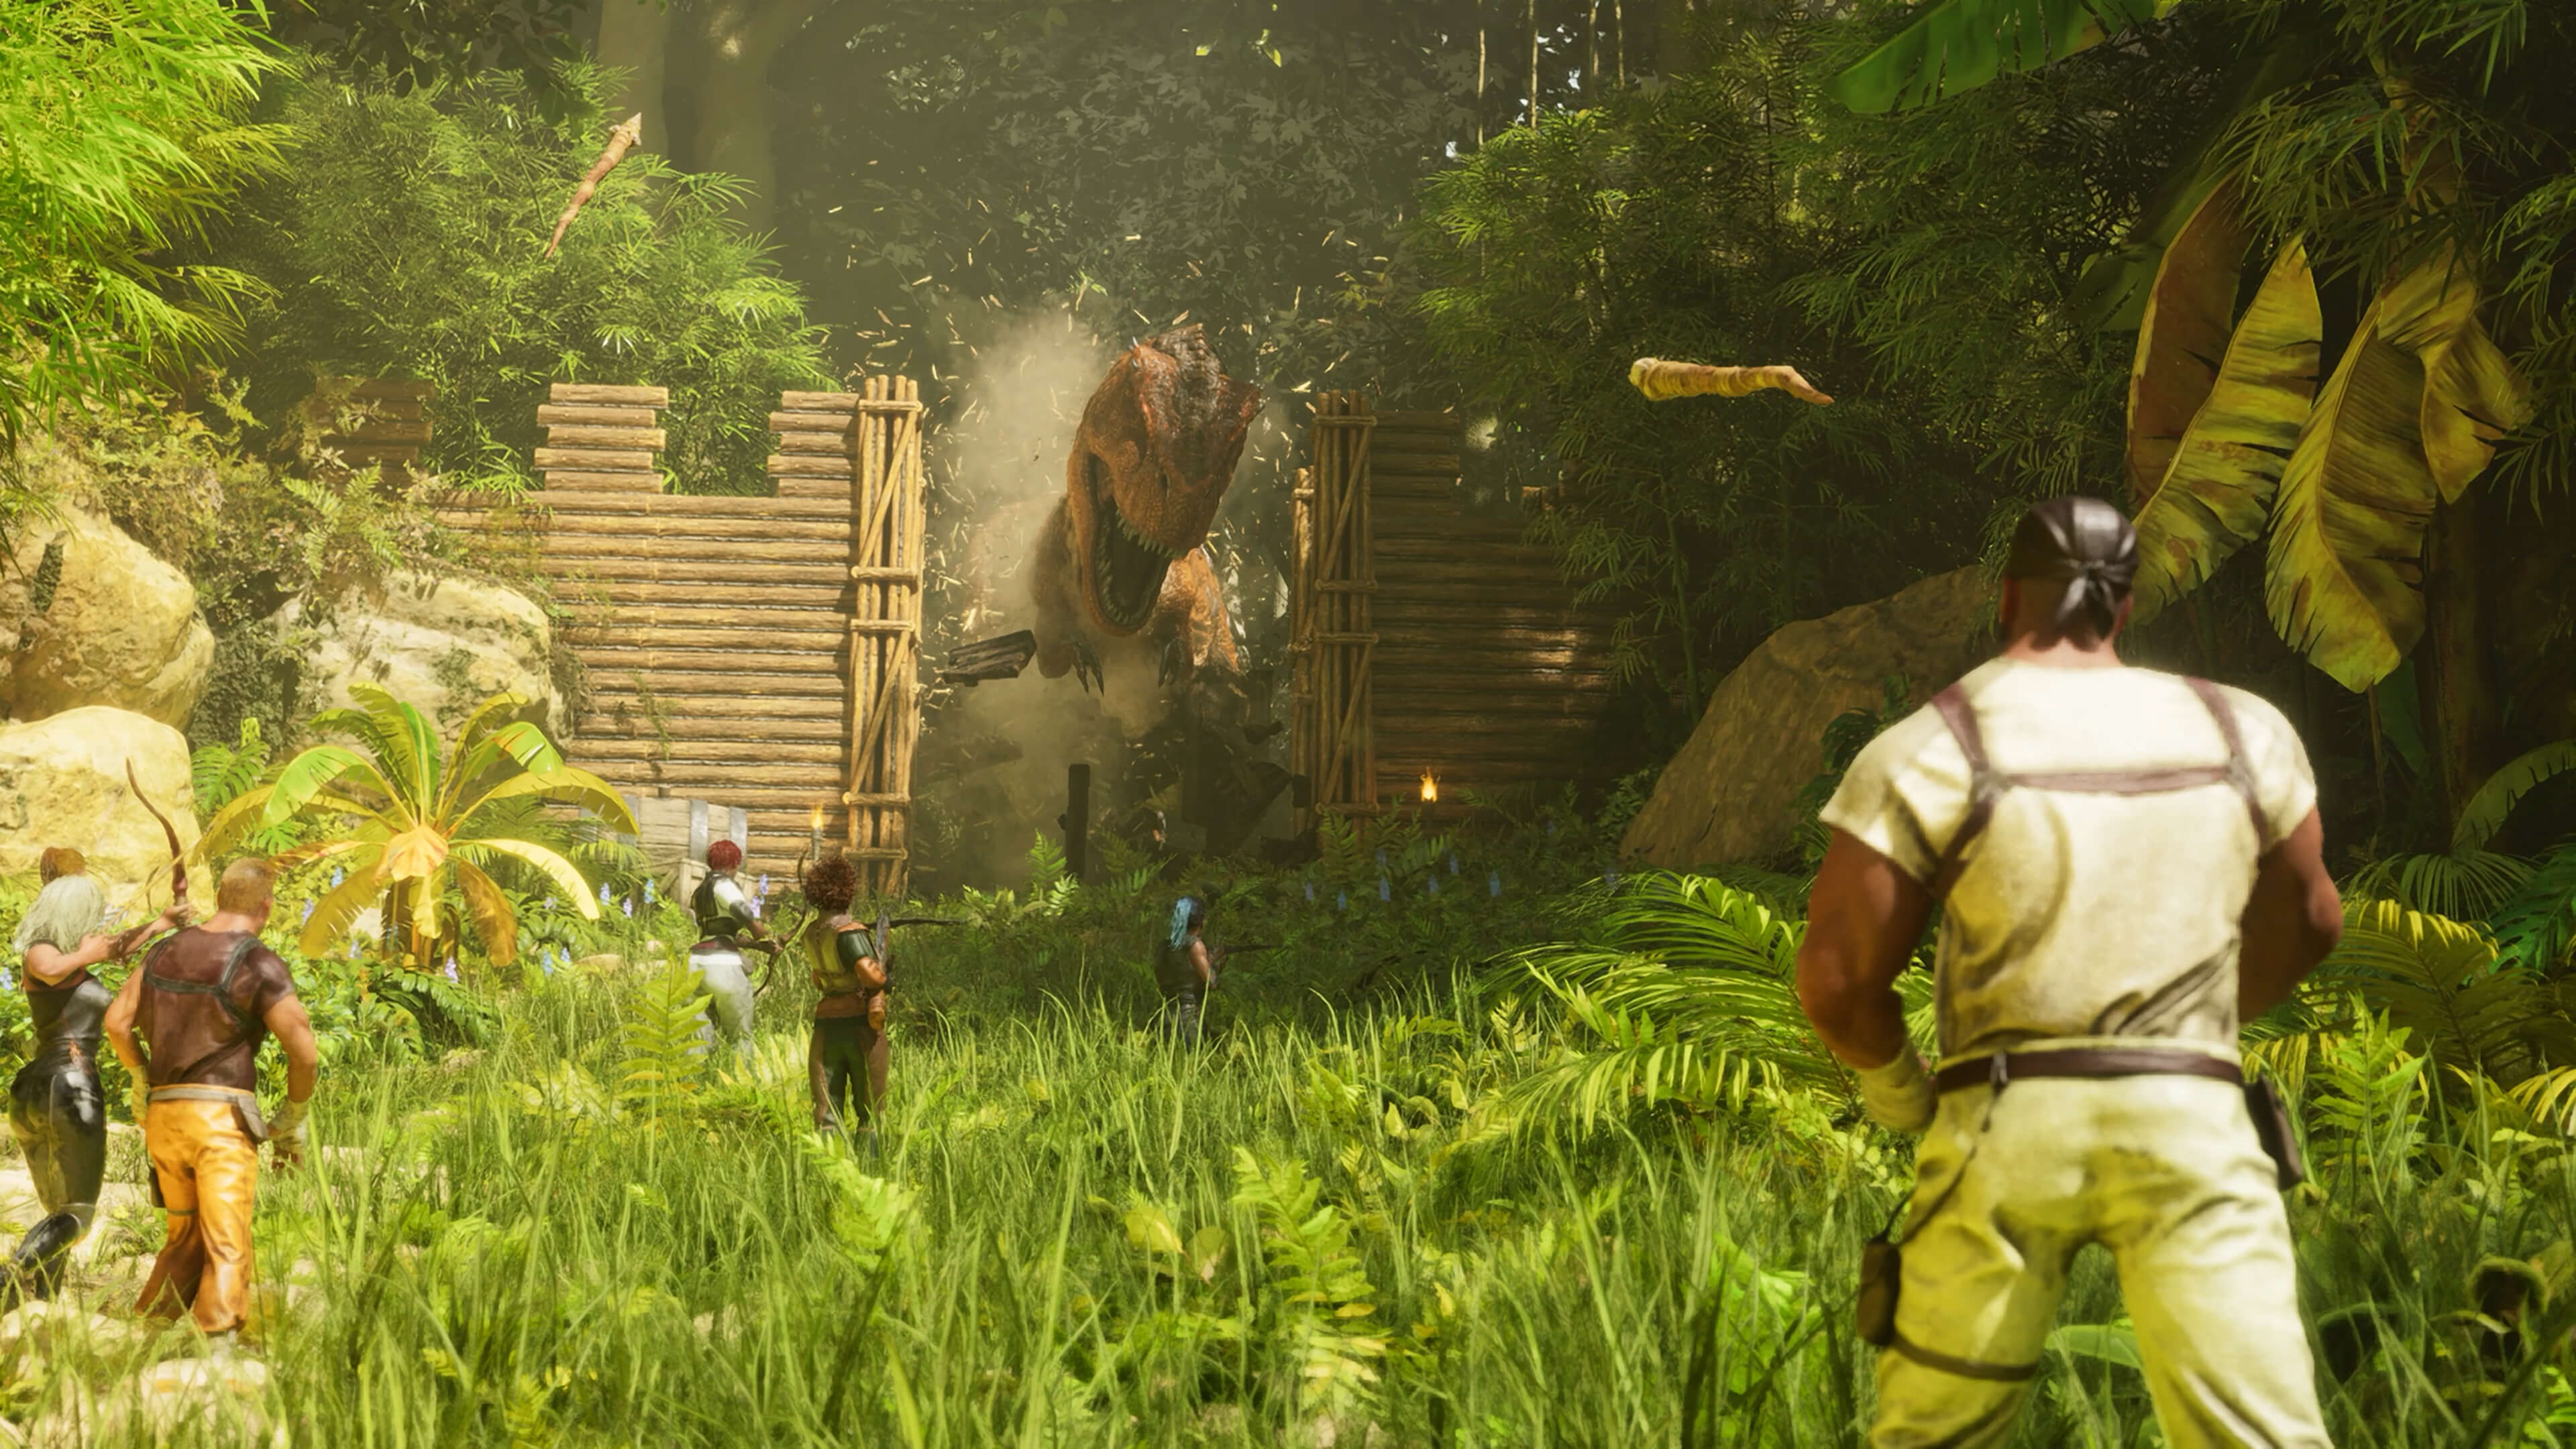 ARK: Survival Evolved Ultimate Survivor Edition - Xbox One | Studio  Wildcard | GameStop